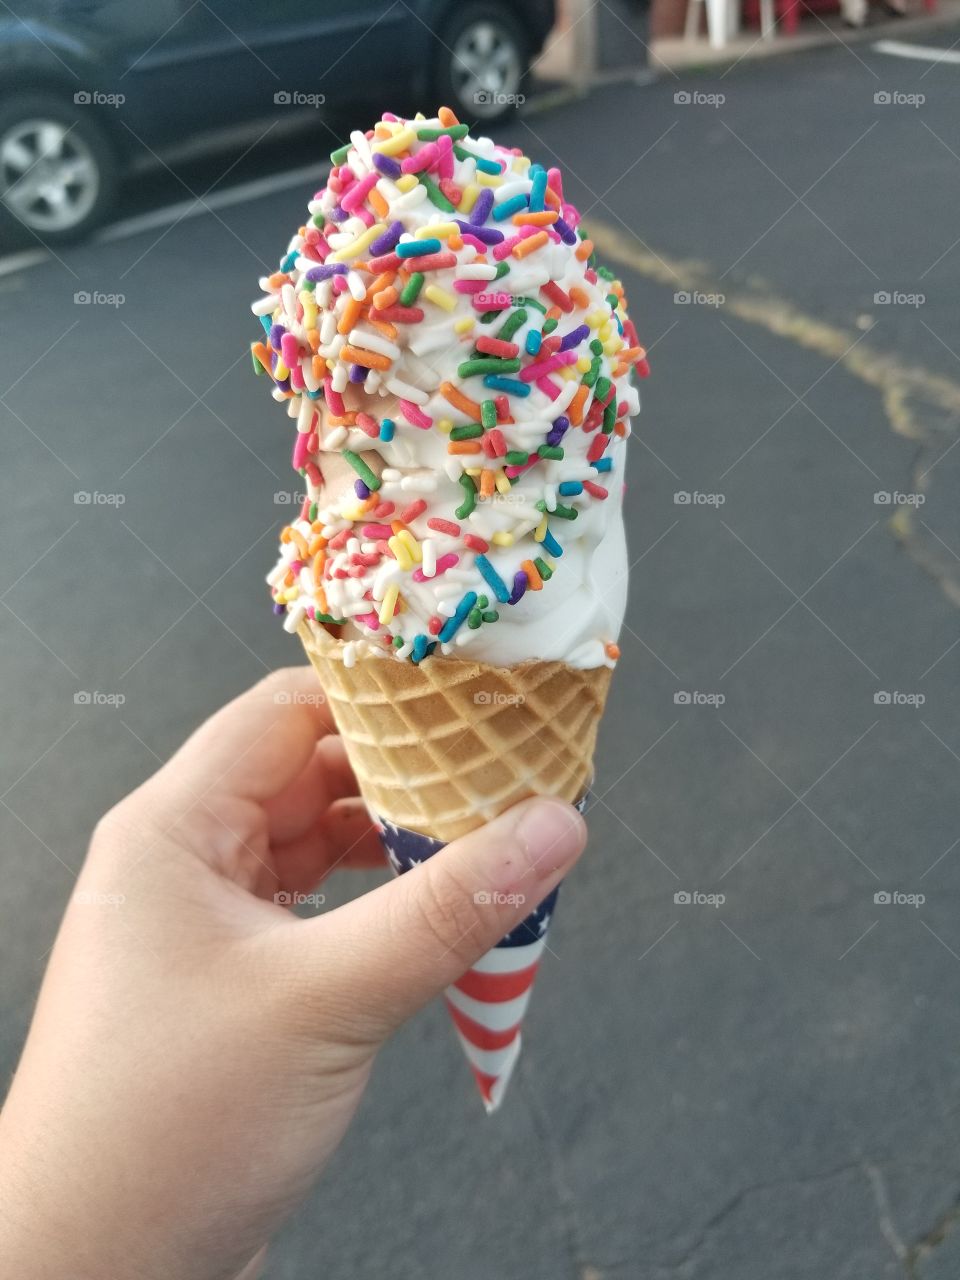 A soft-serve vanilla ice cream cone with rainbow sprinkles.